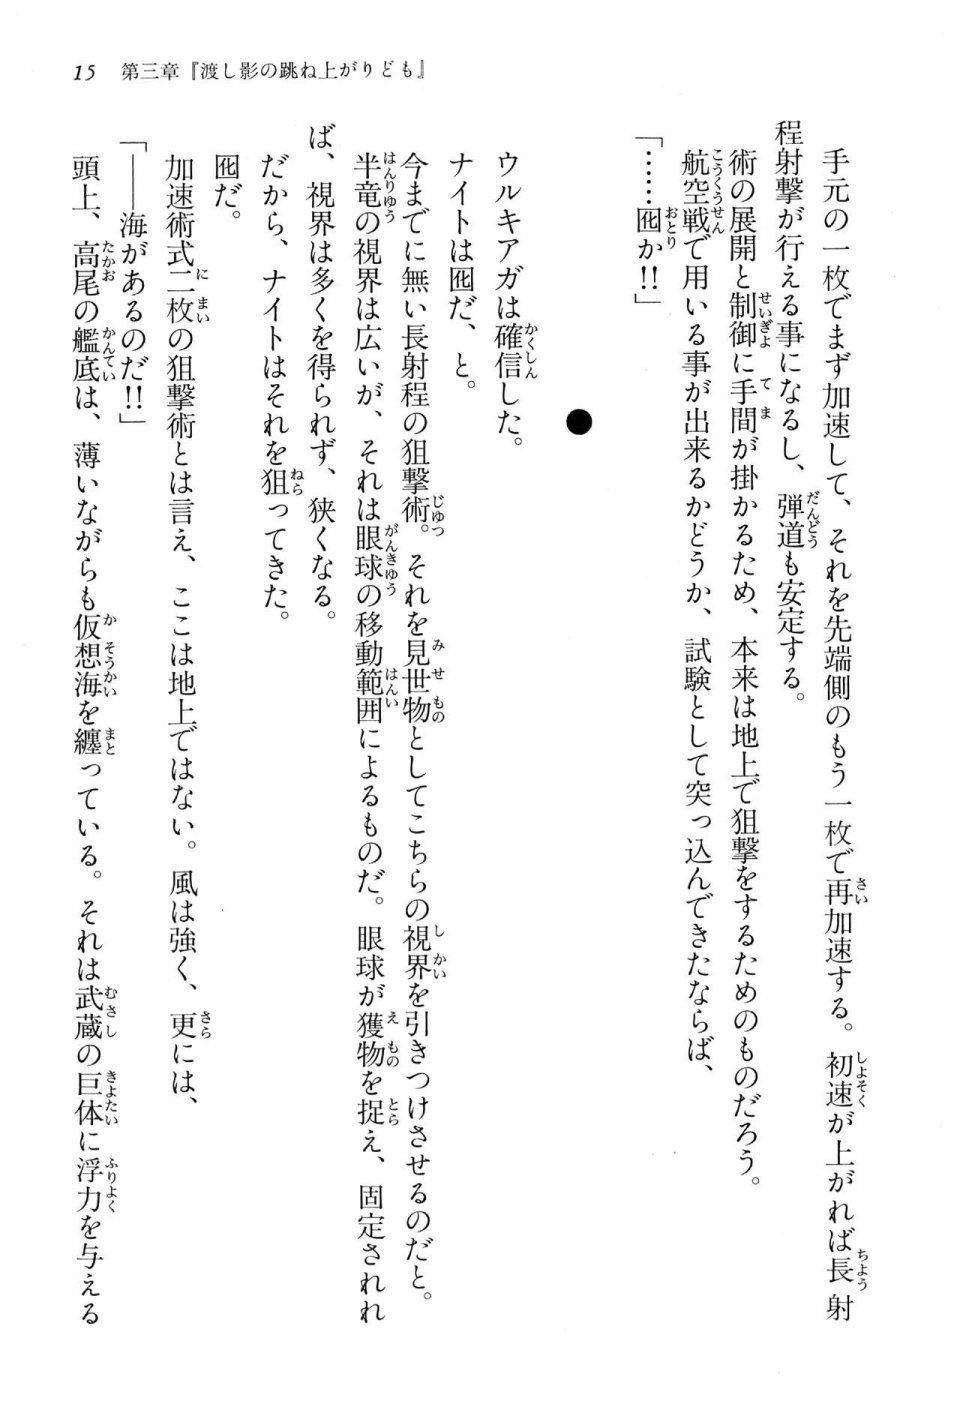 Kyoukai Senjou no Horizon BD Special Mininovel Vol 2(1B) - Photo #19